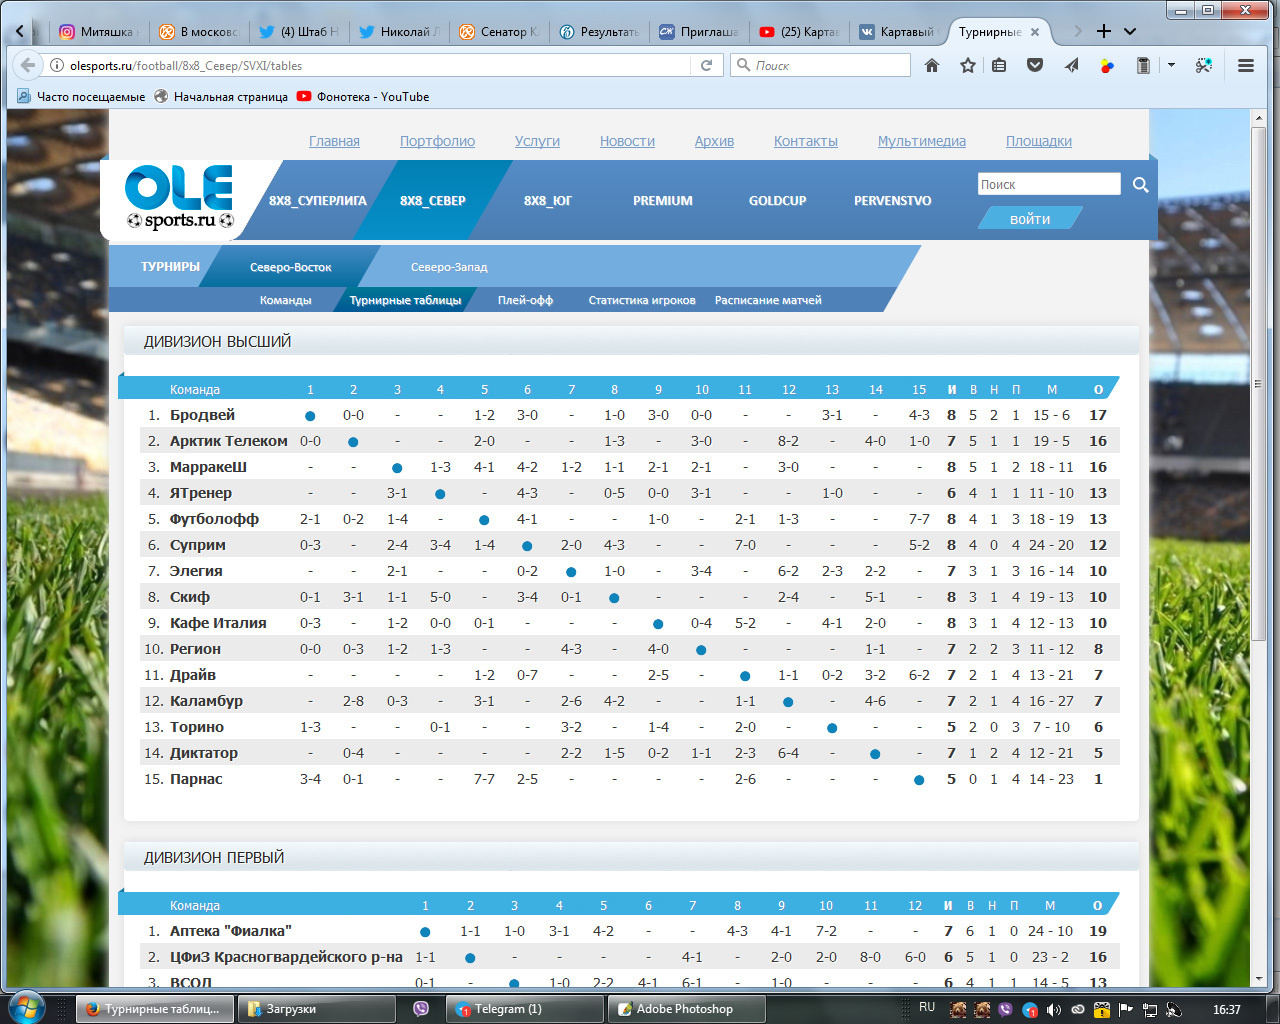 скриншот страницы сайта <a href="http://olesports.ru/football/8%D1%858_%D0%A1%D0%B5%D0%B2%D0%B5%D1%80/SVXI/tables">OLEsports.ru"</a>